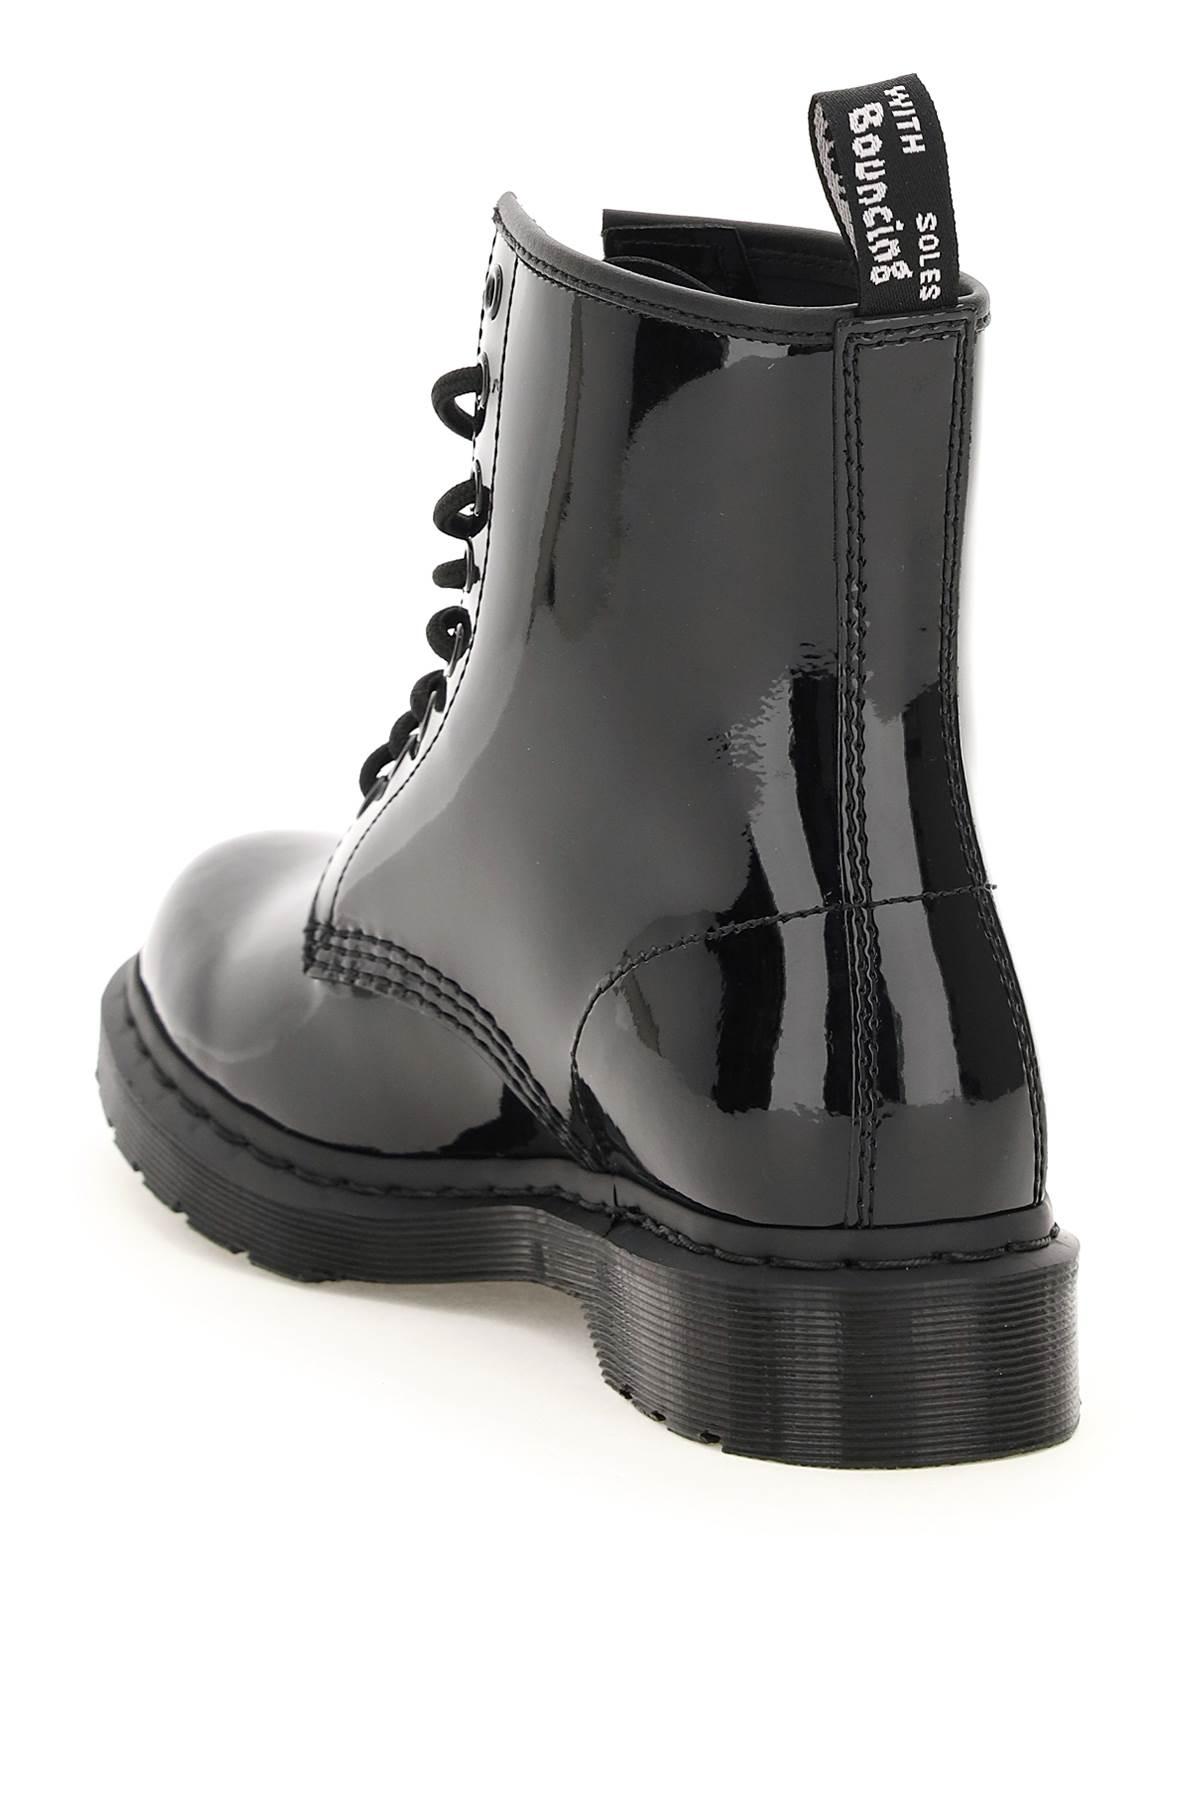 Dr. Martens 1460 Mono Patent Lamper Lace-up Combat Boots 3 Leather 